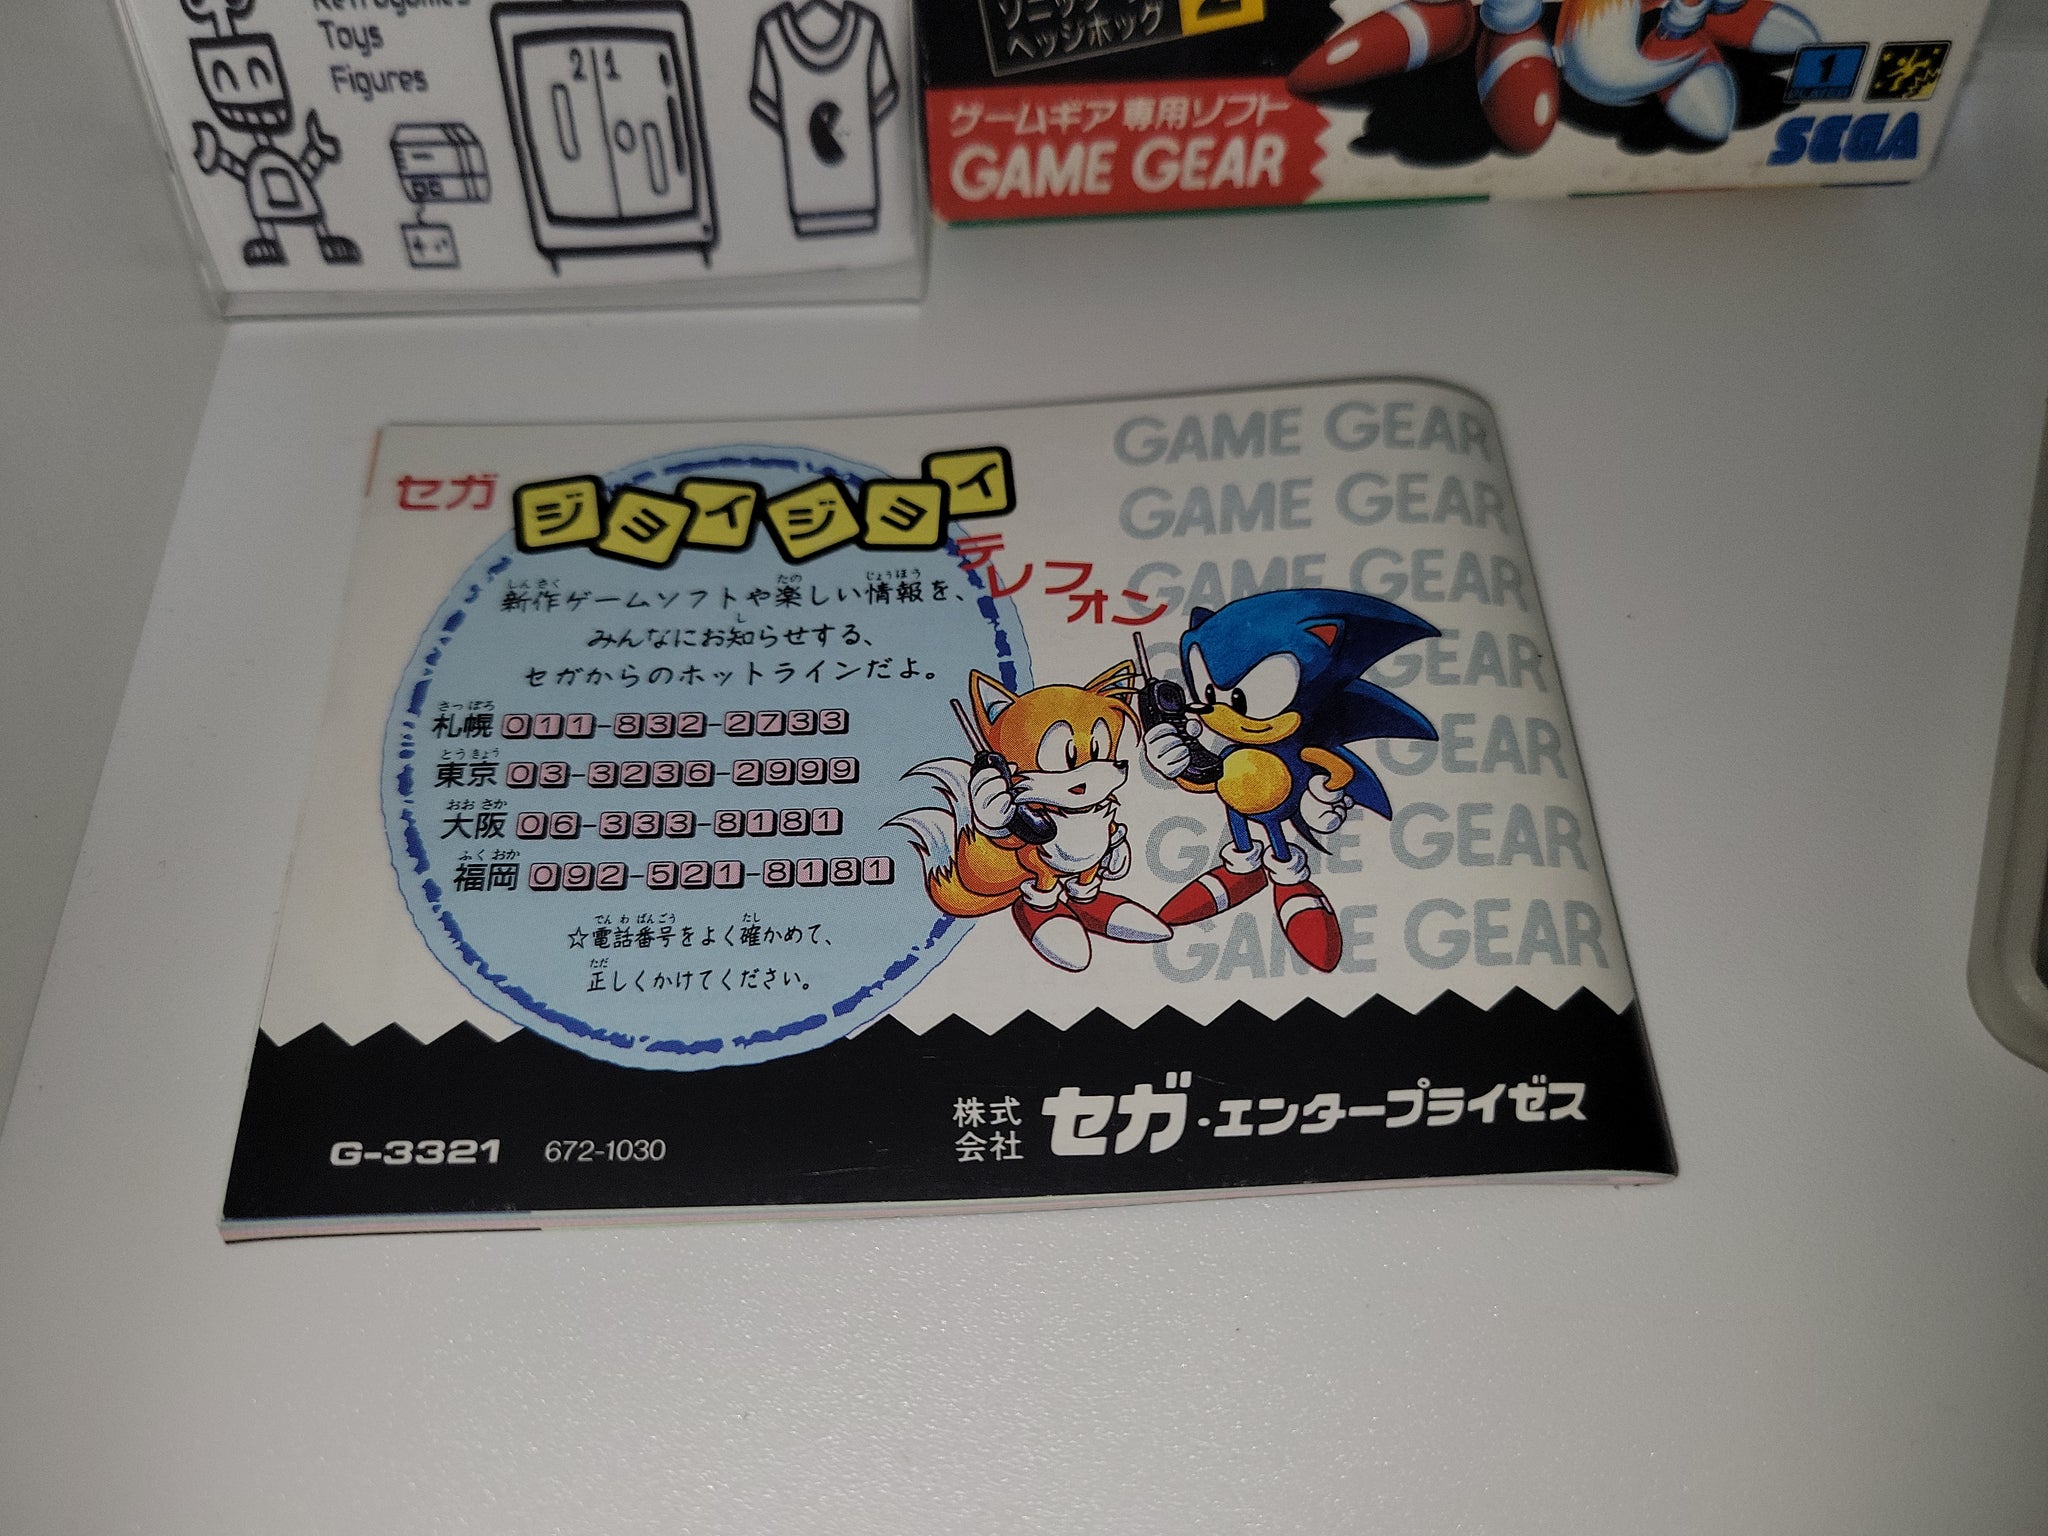 Sonic 1 The Hedgehog Sega Gamegear Game Gear